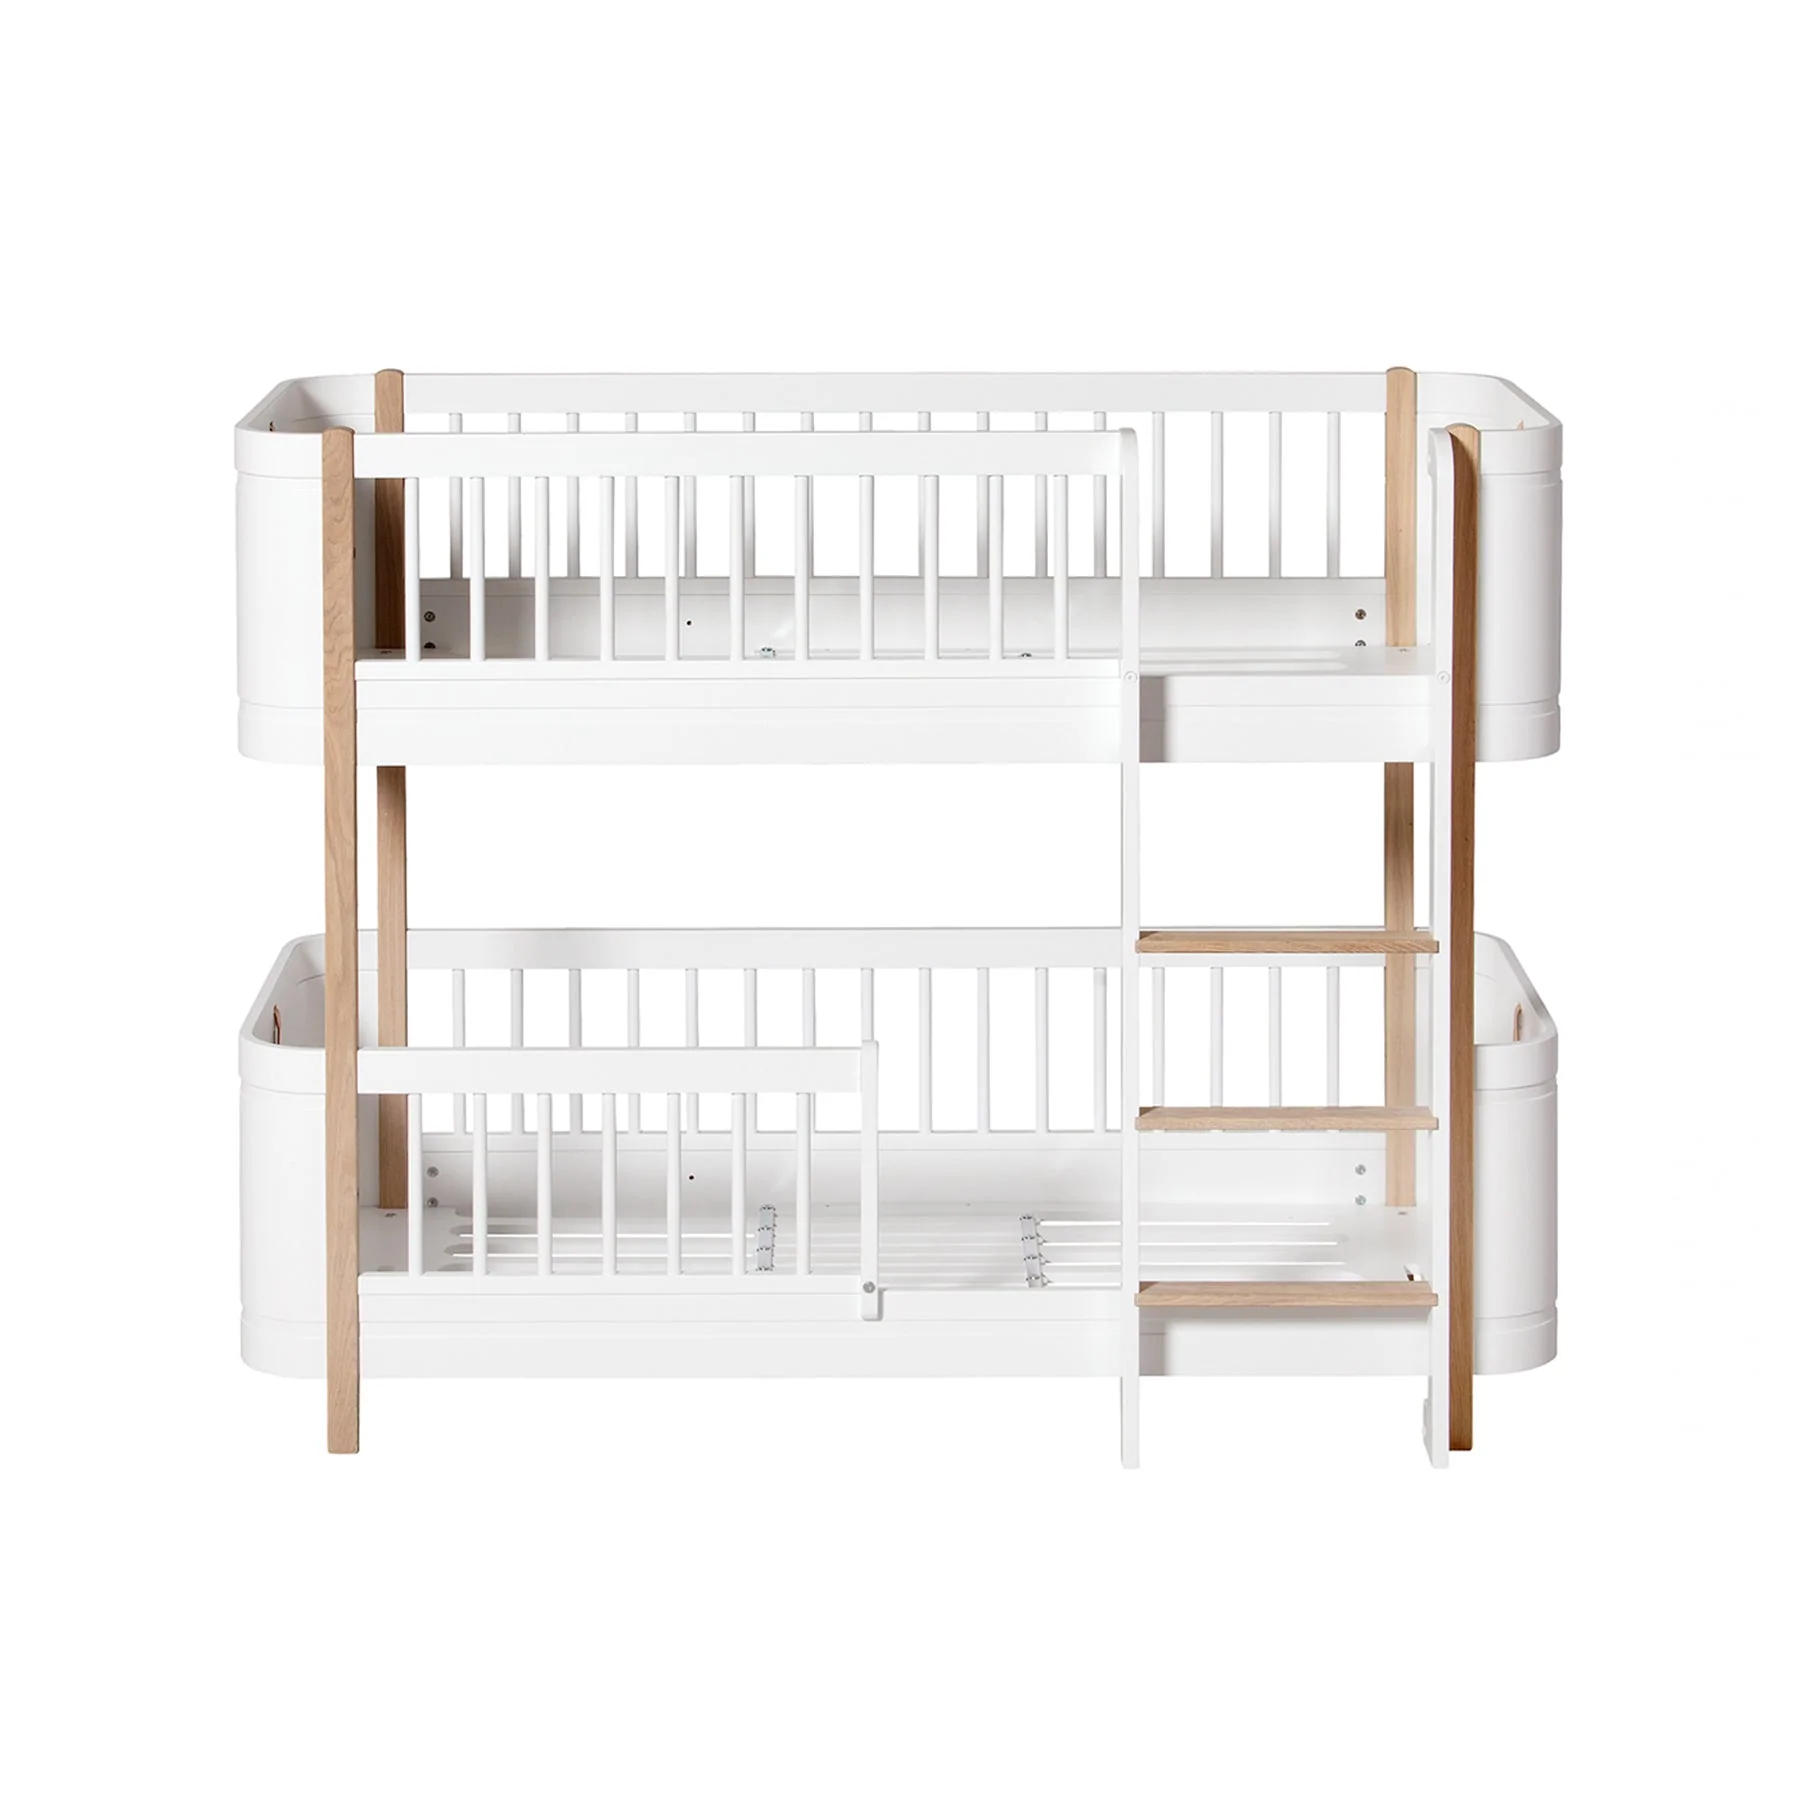 oliver-furniture-beliche.baixo-wood-mini-